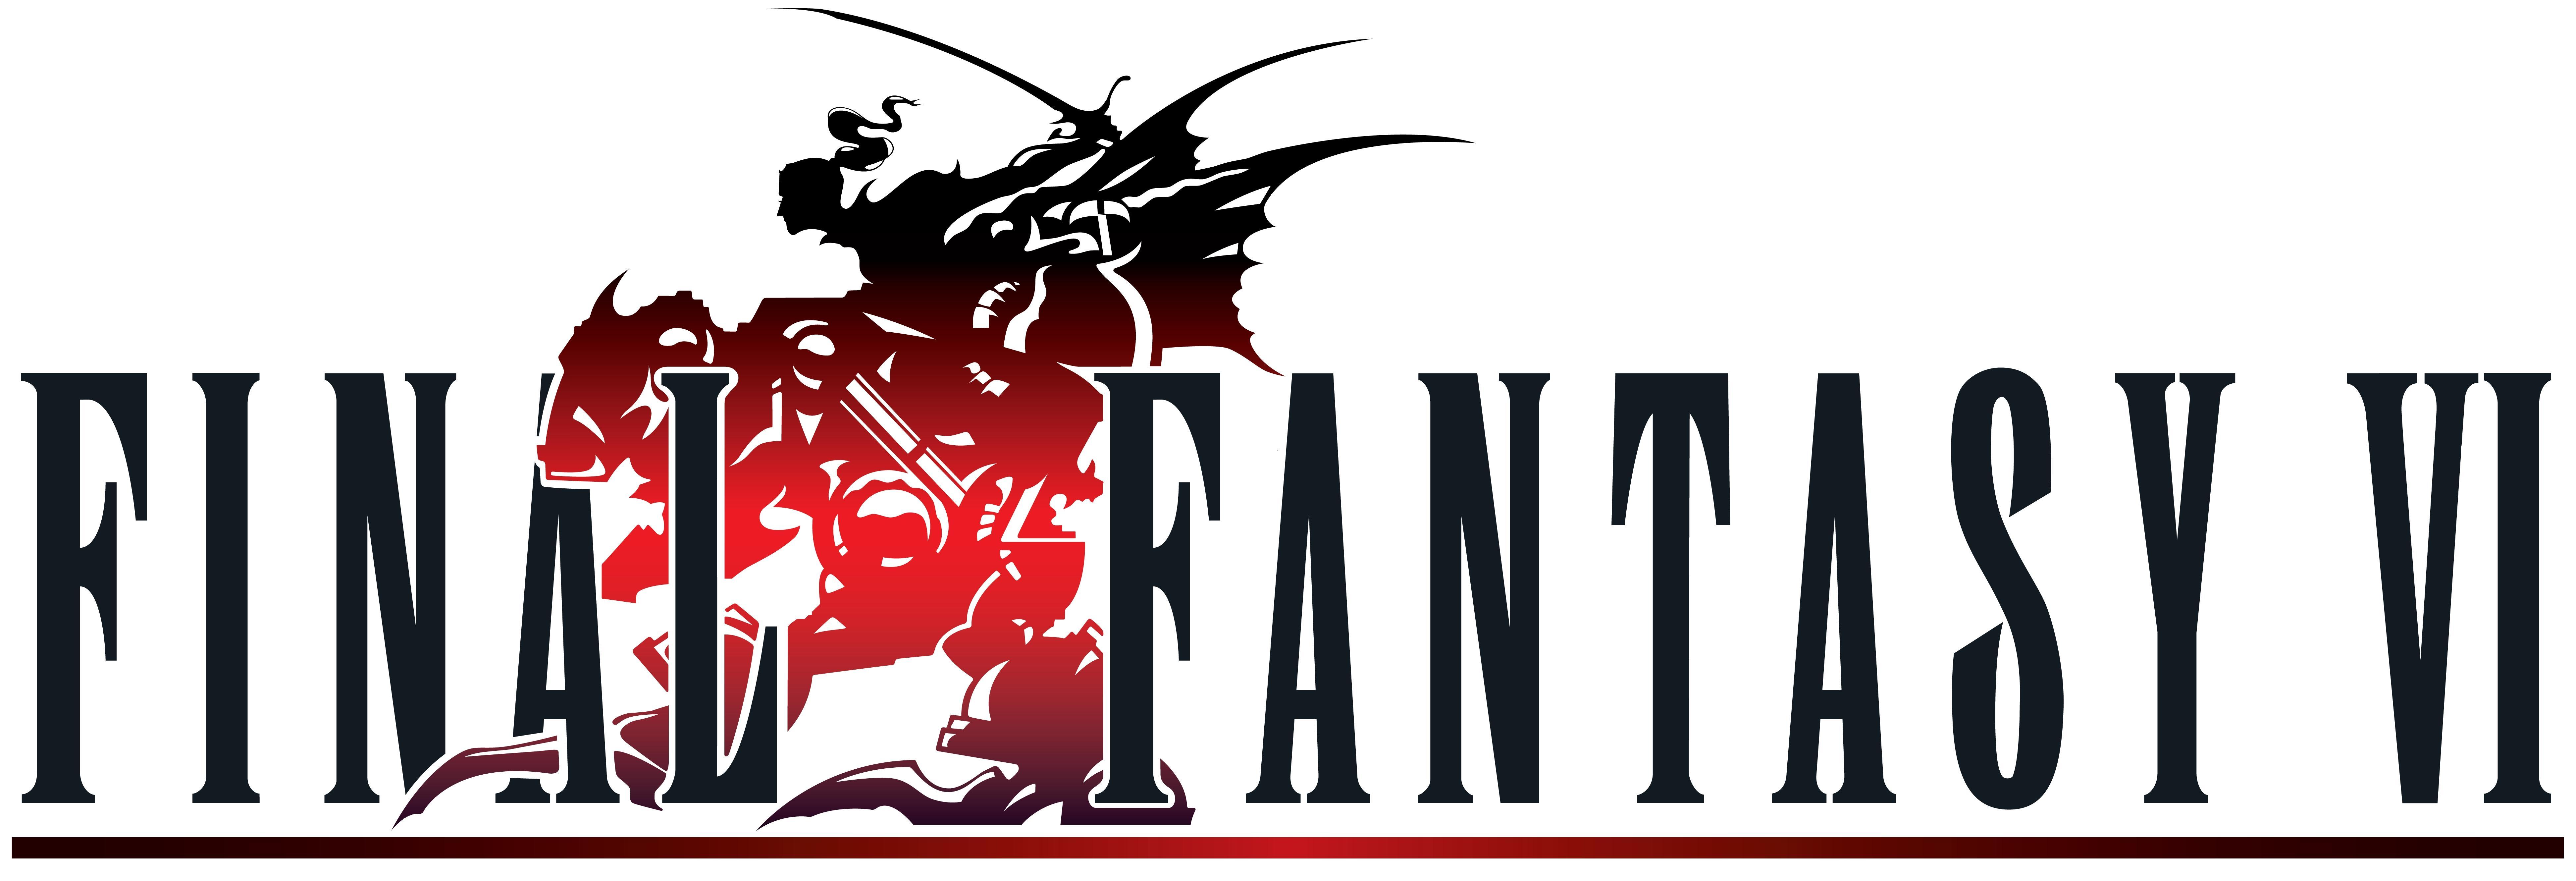 Final Fantasy VI Desktop Wallpapers, Final Fantasy VI, Game